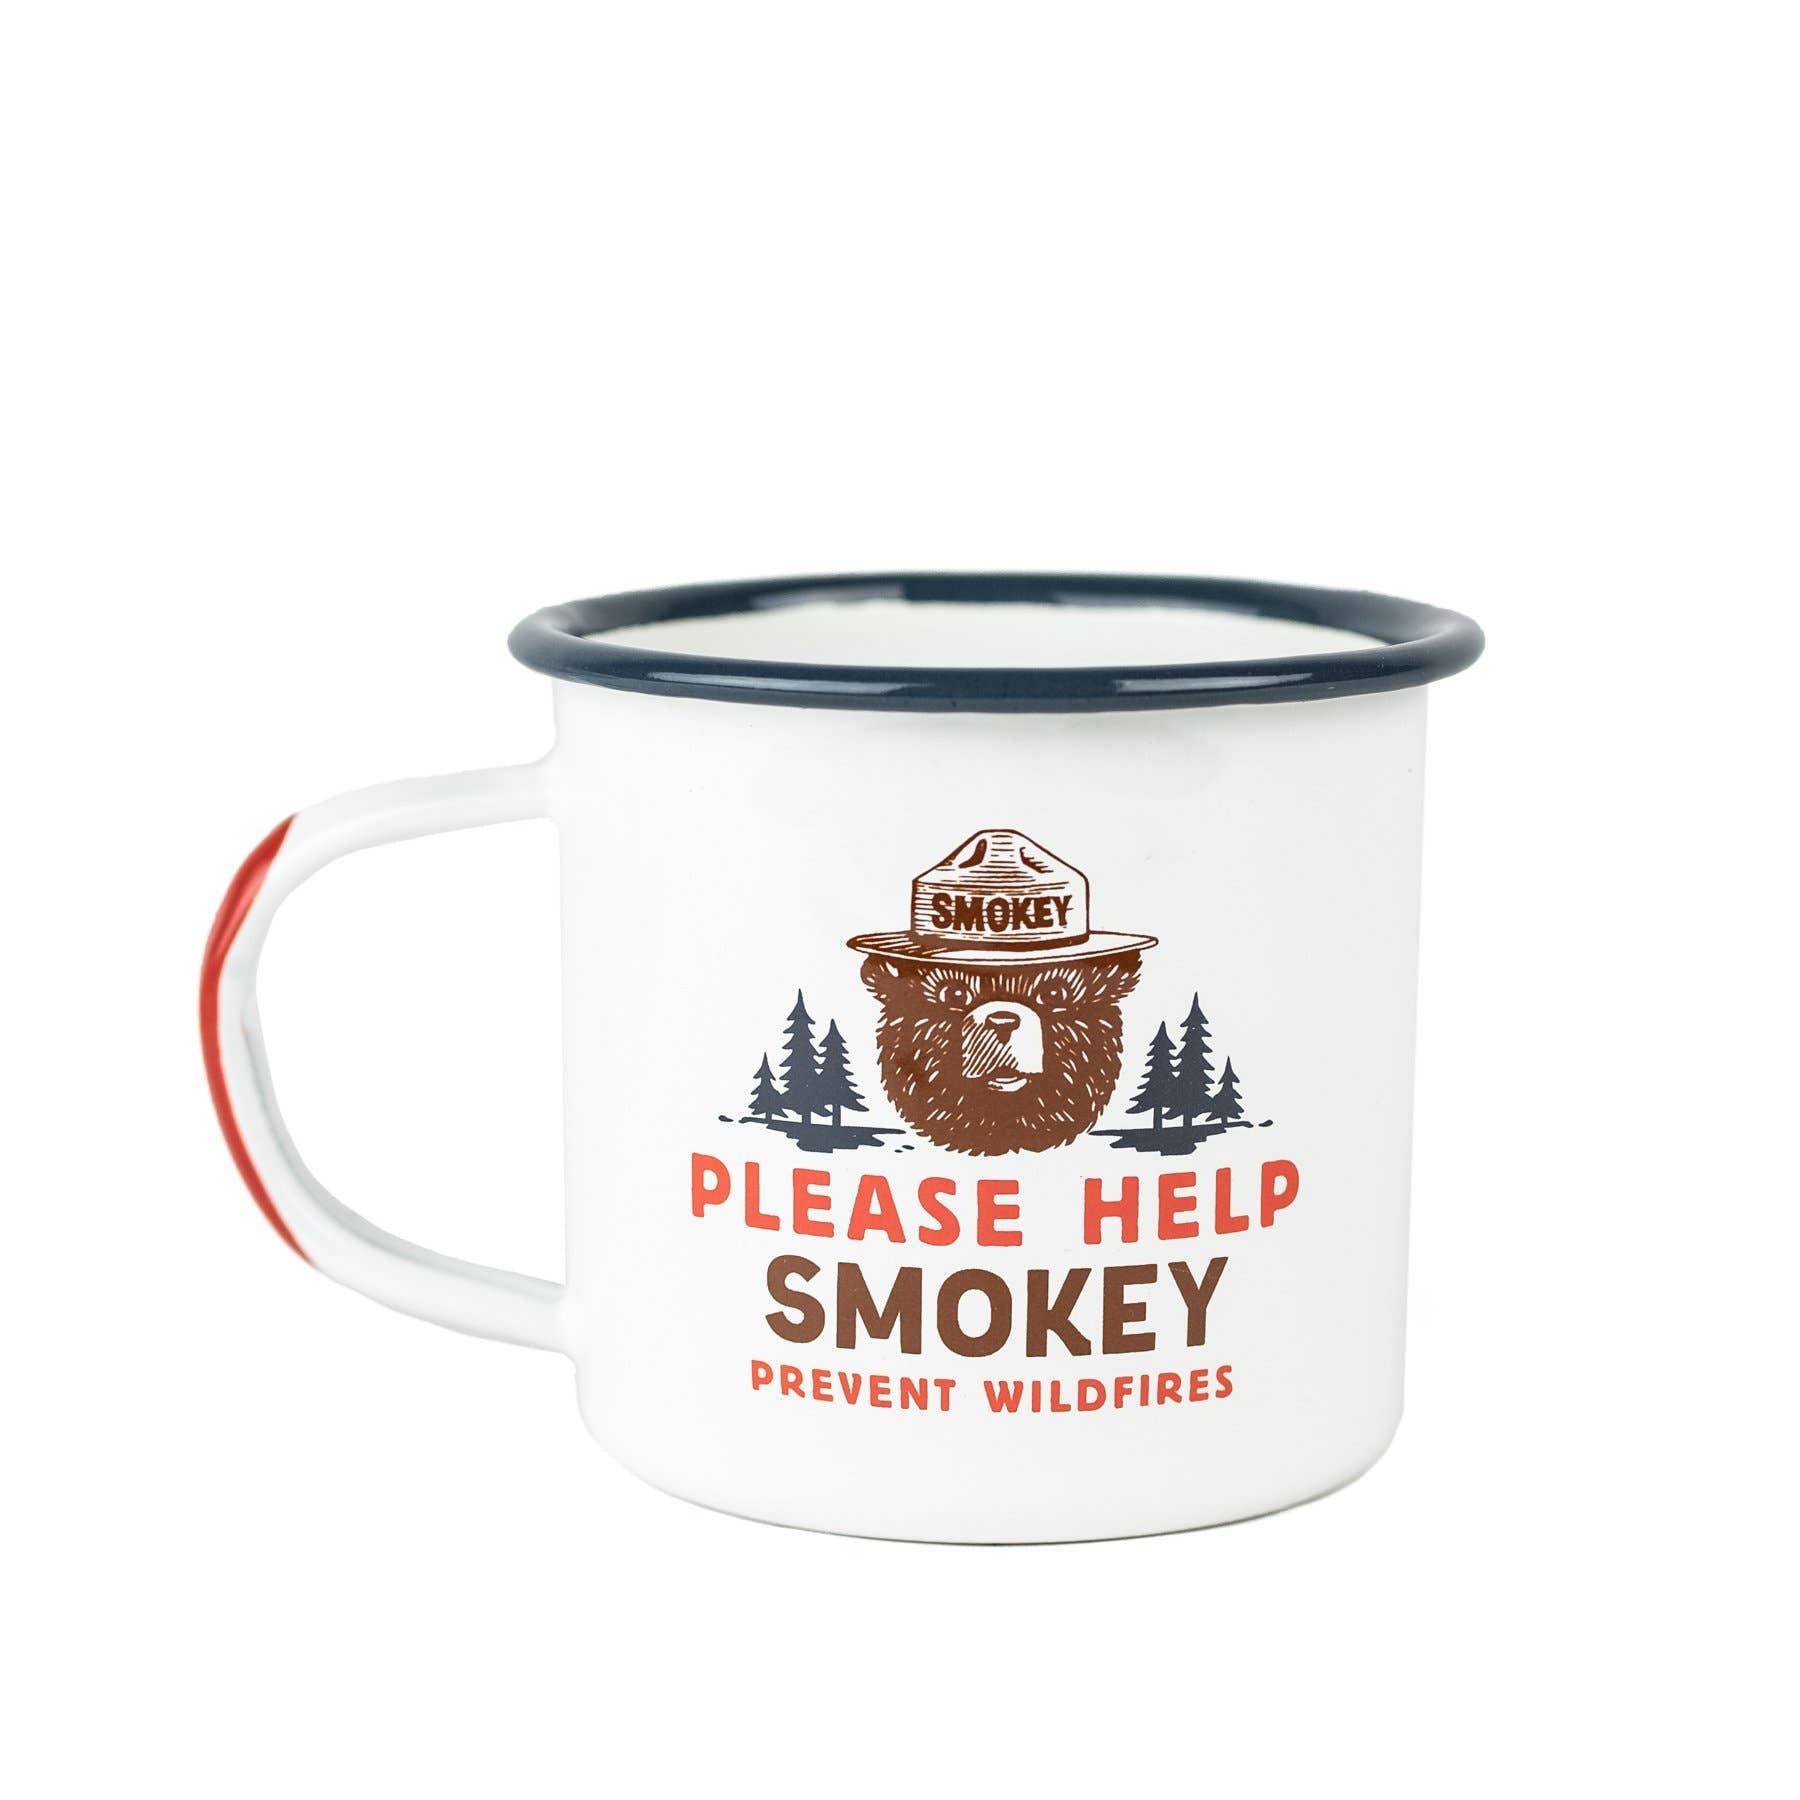 Please help The Landmark Project Smokey Enamelware Mug prevent wildlife.